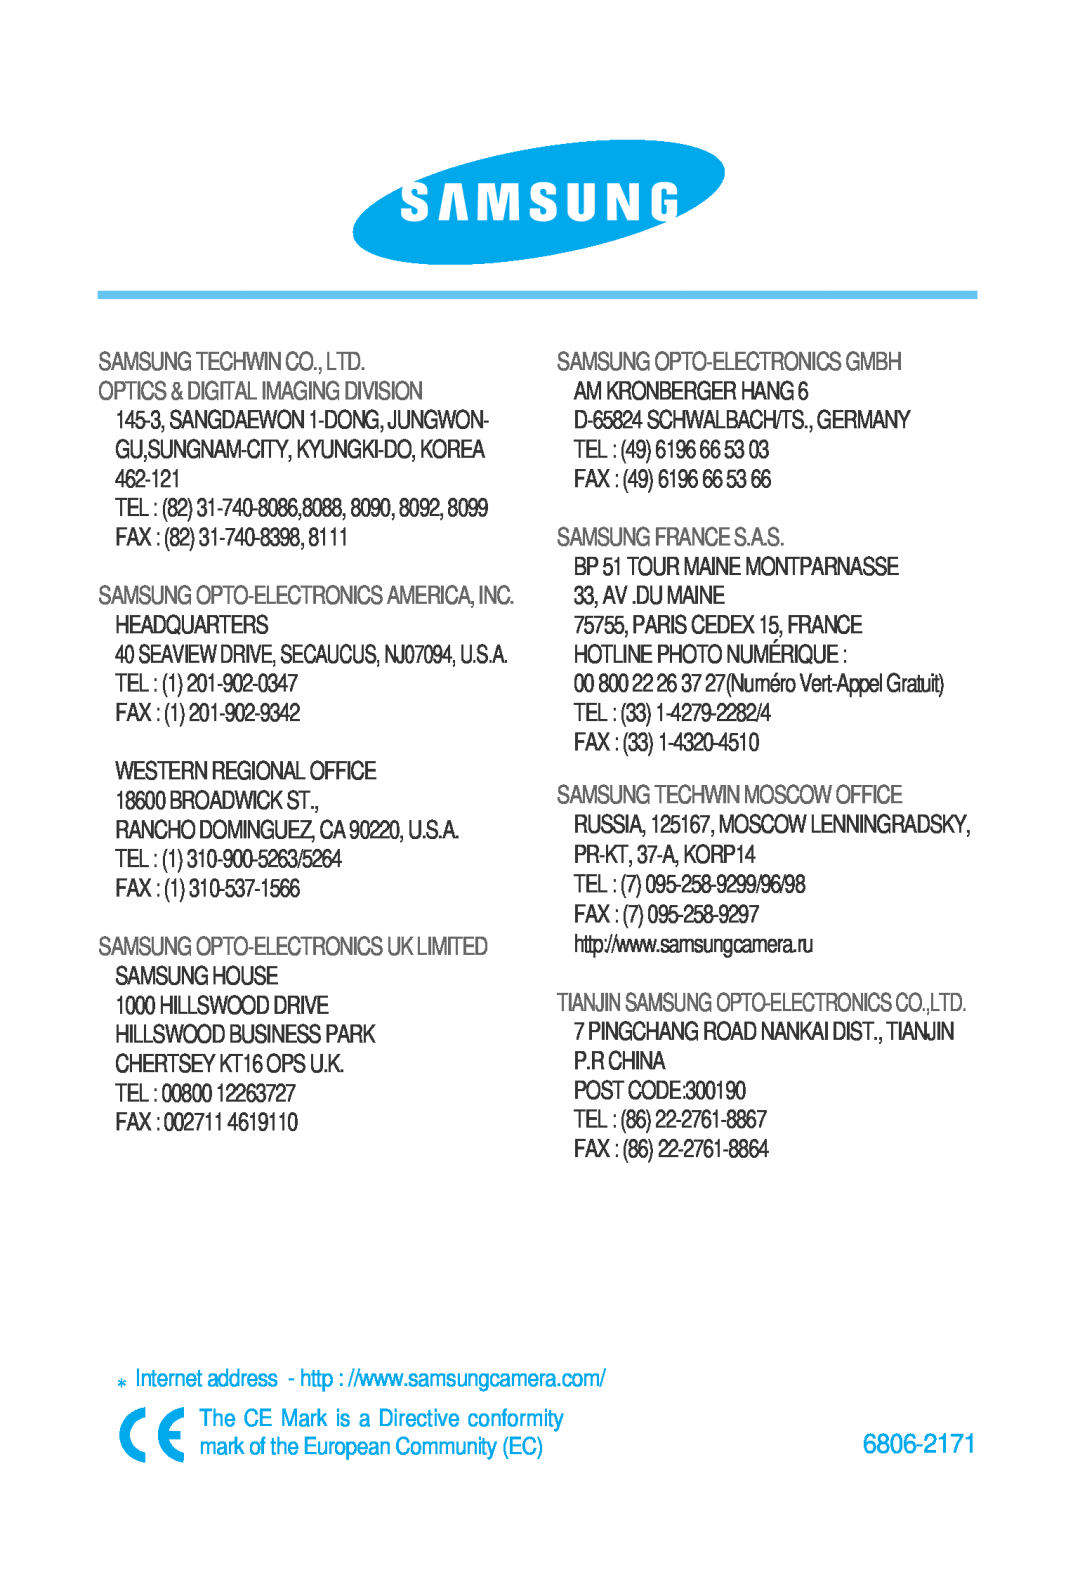 Samsung Digimax U-CA user manual 6806-2171, Samsung Opto-Electronics America, Inc. Headquarters, Samsung France S.A.S 